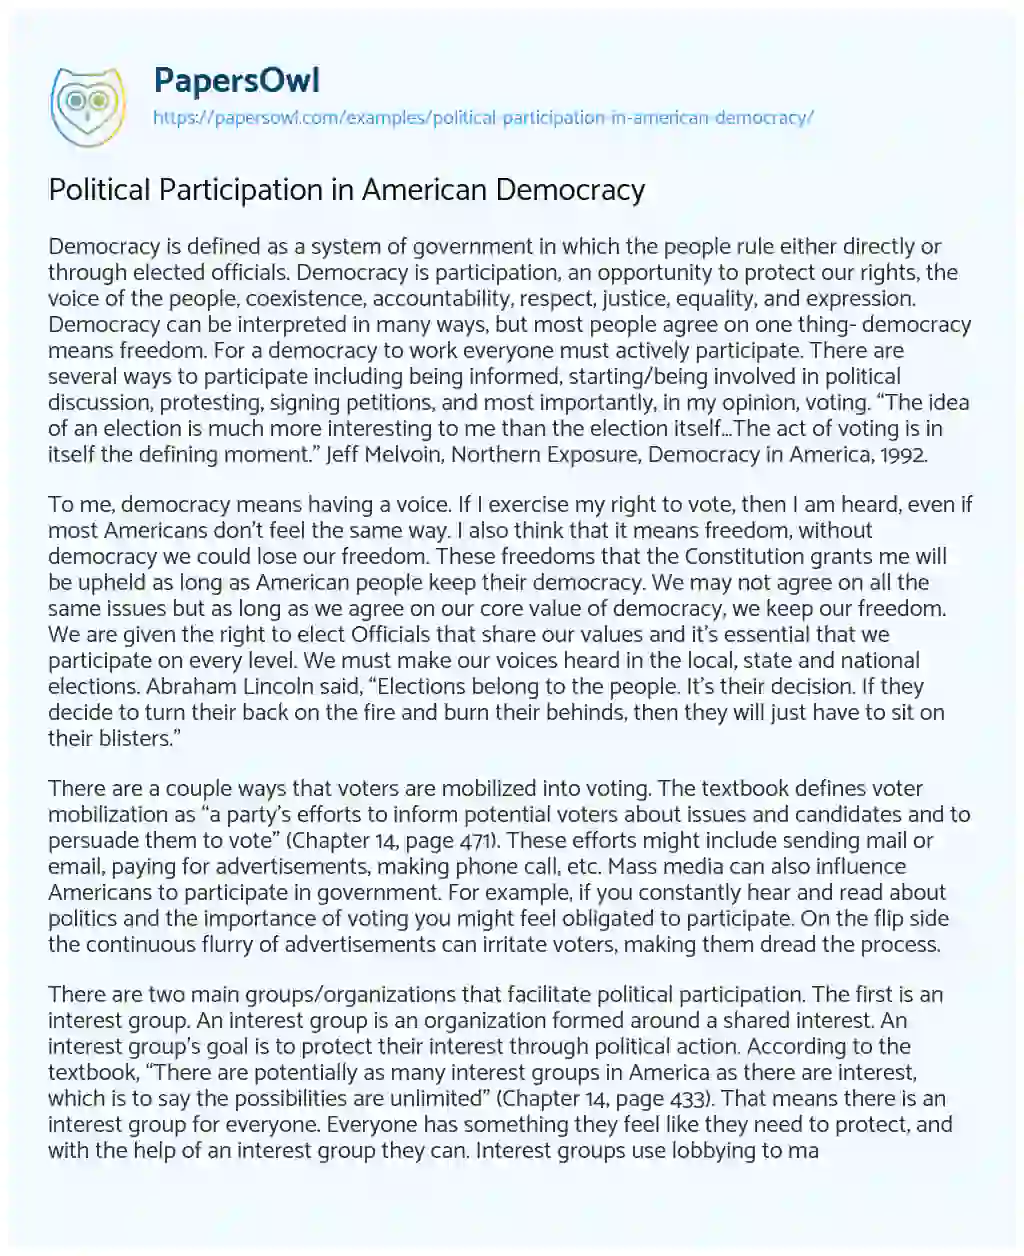 Essay on Political Participation in American Democracy